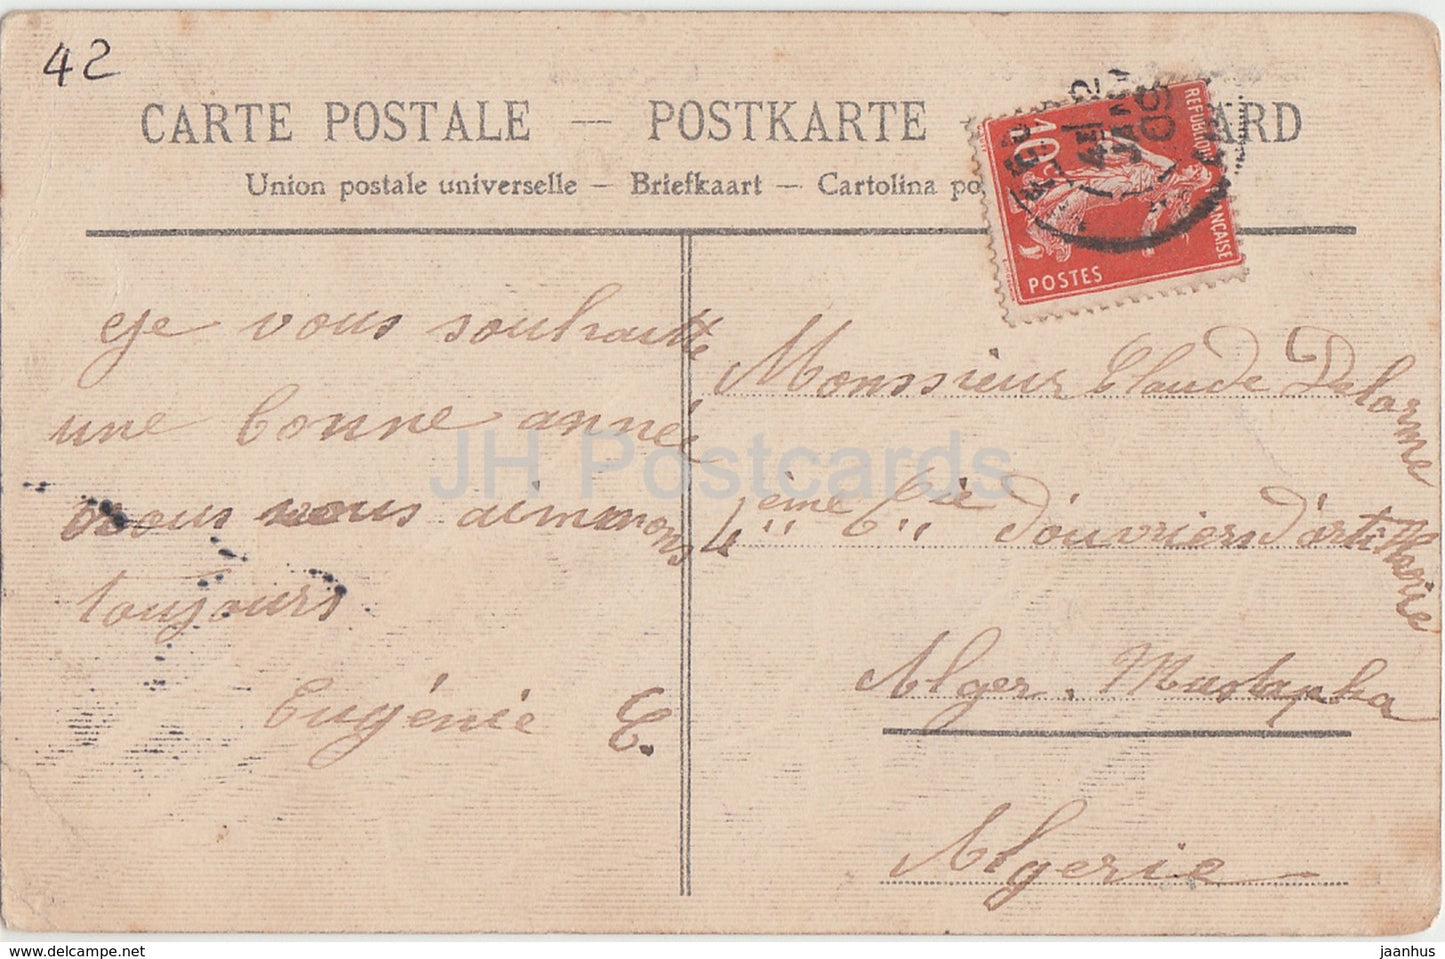 St. Marcel de Felines – Pres Balbigny – Le Chateau – Schloss – alte Postkarte – 1909 – Frankreich – gebraucht